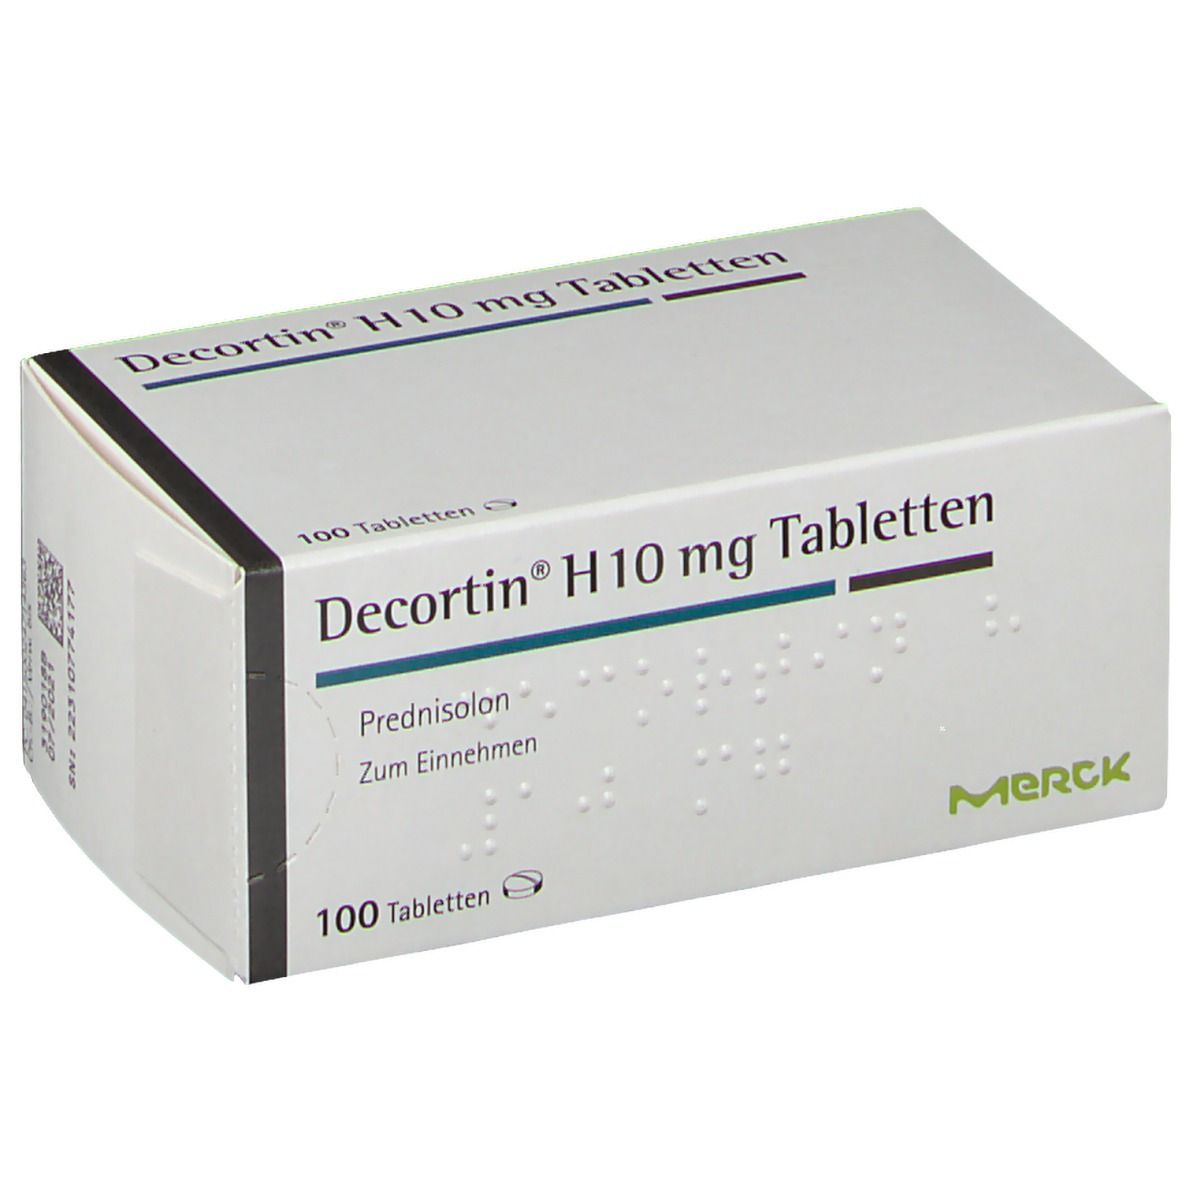 Decortin® H 10 mg